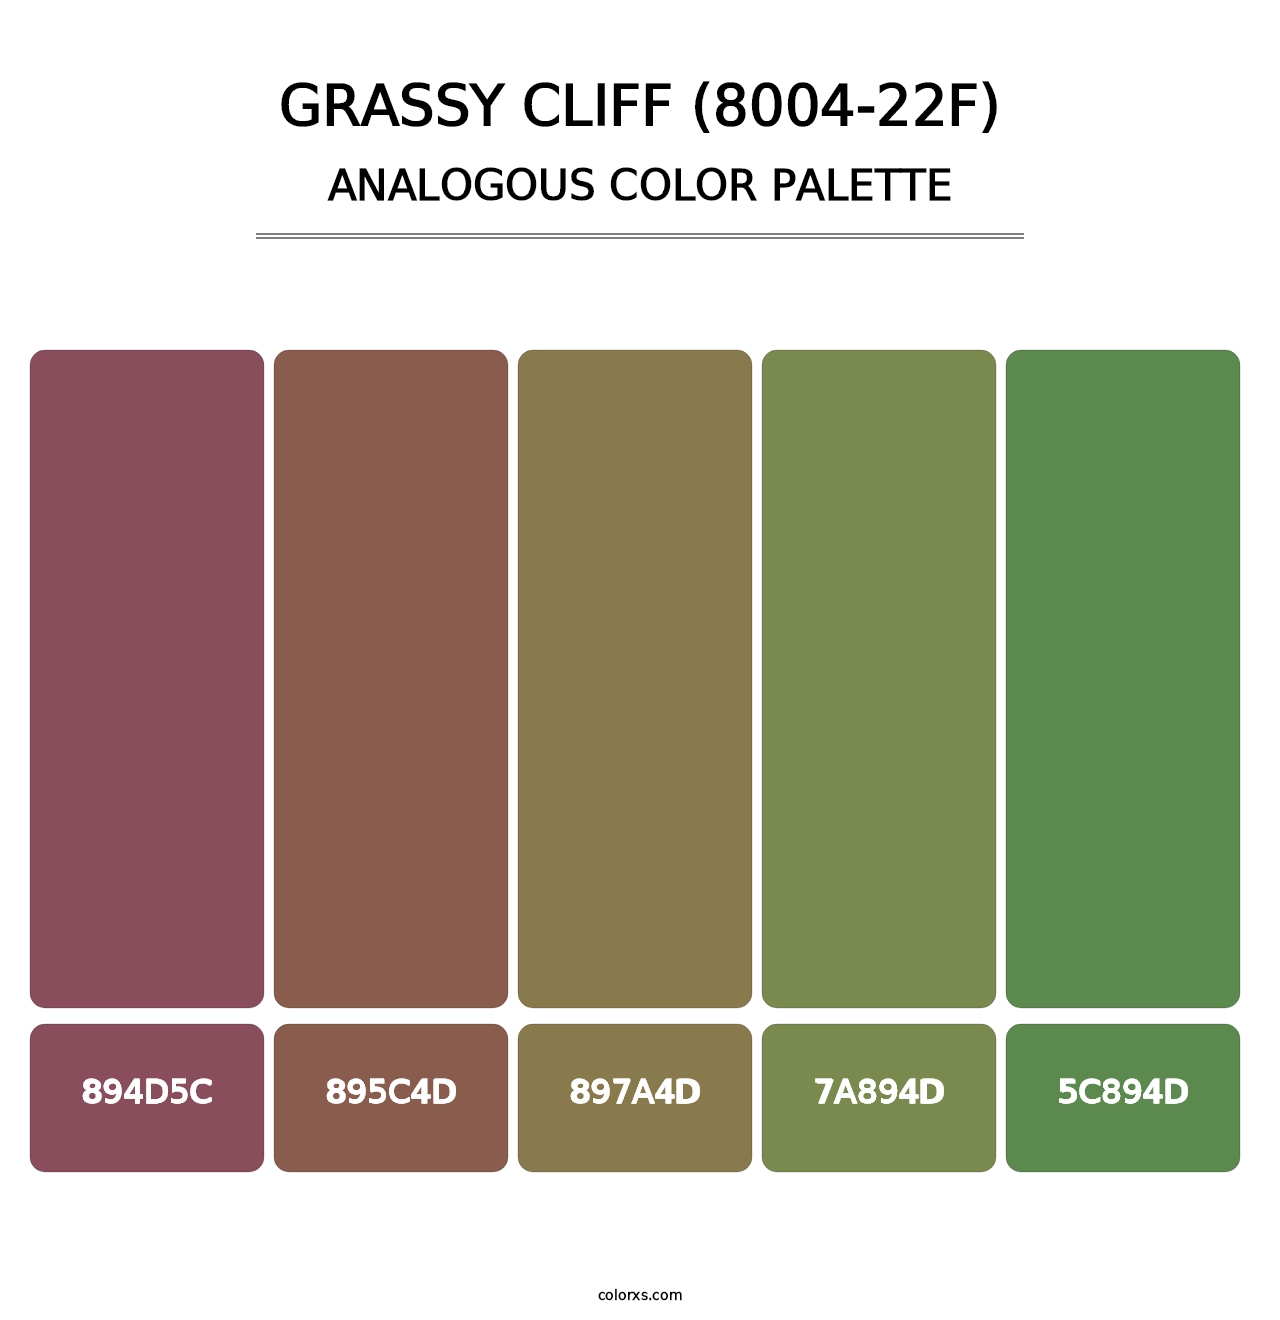 Grassy Cliff (8004-22F) - Analogous Color Palette